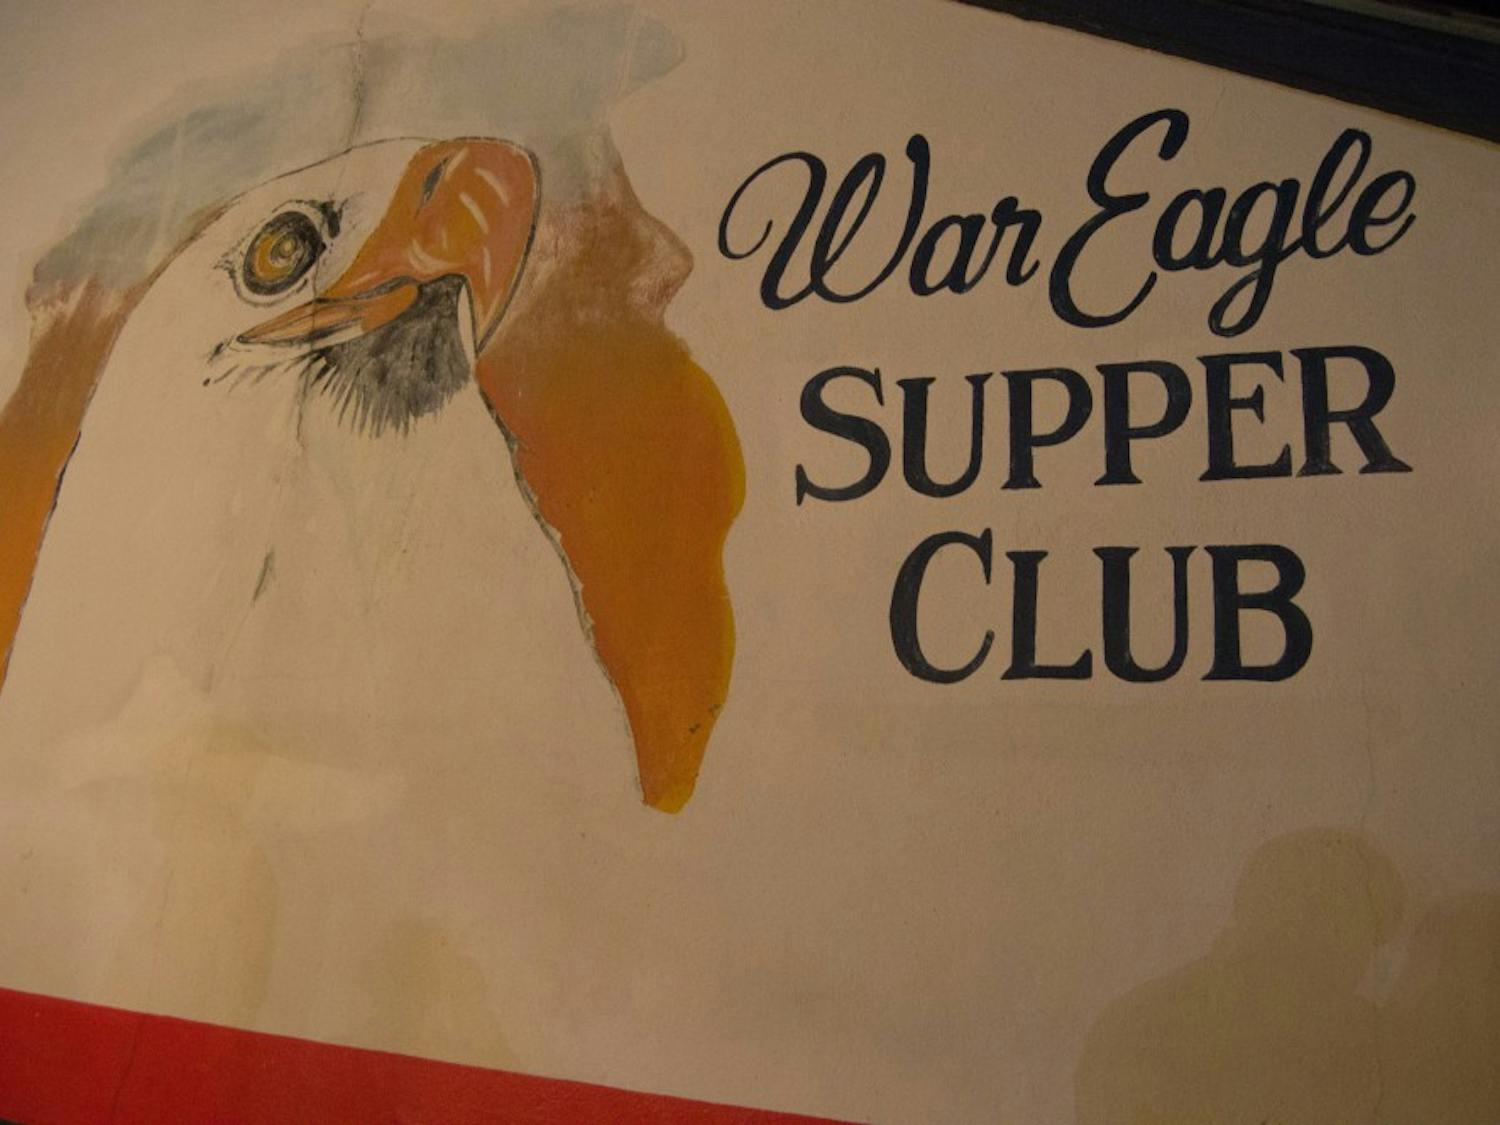 The War Eagle Supper Club held its "Last Call" on Dec. 31, 2015.